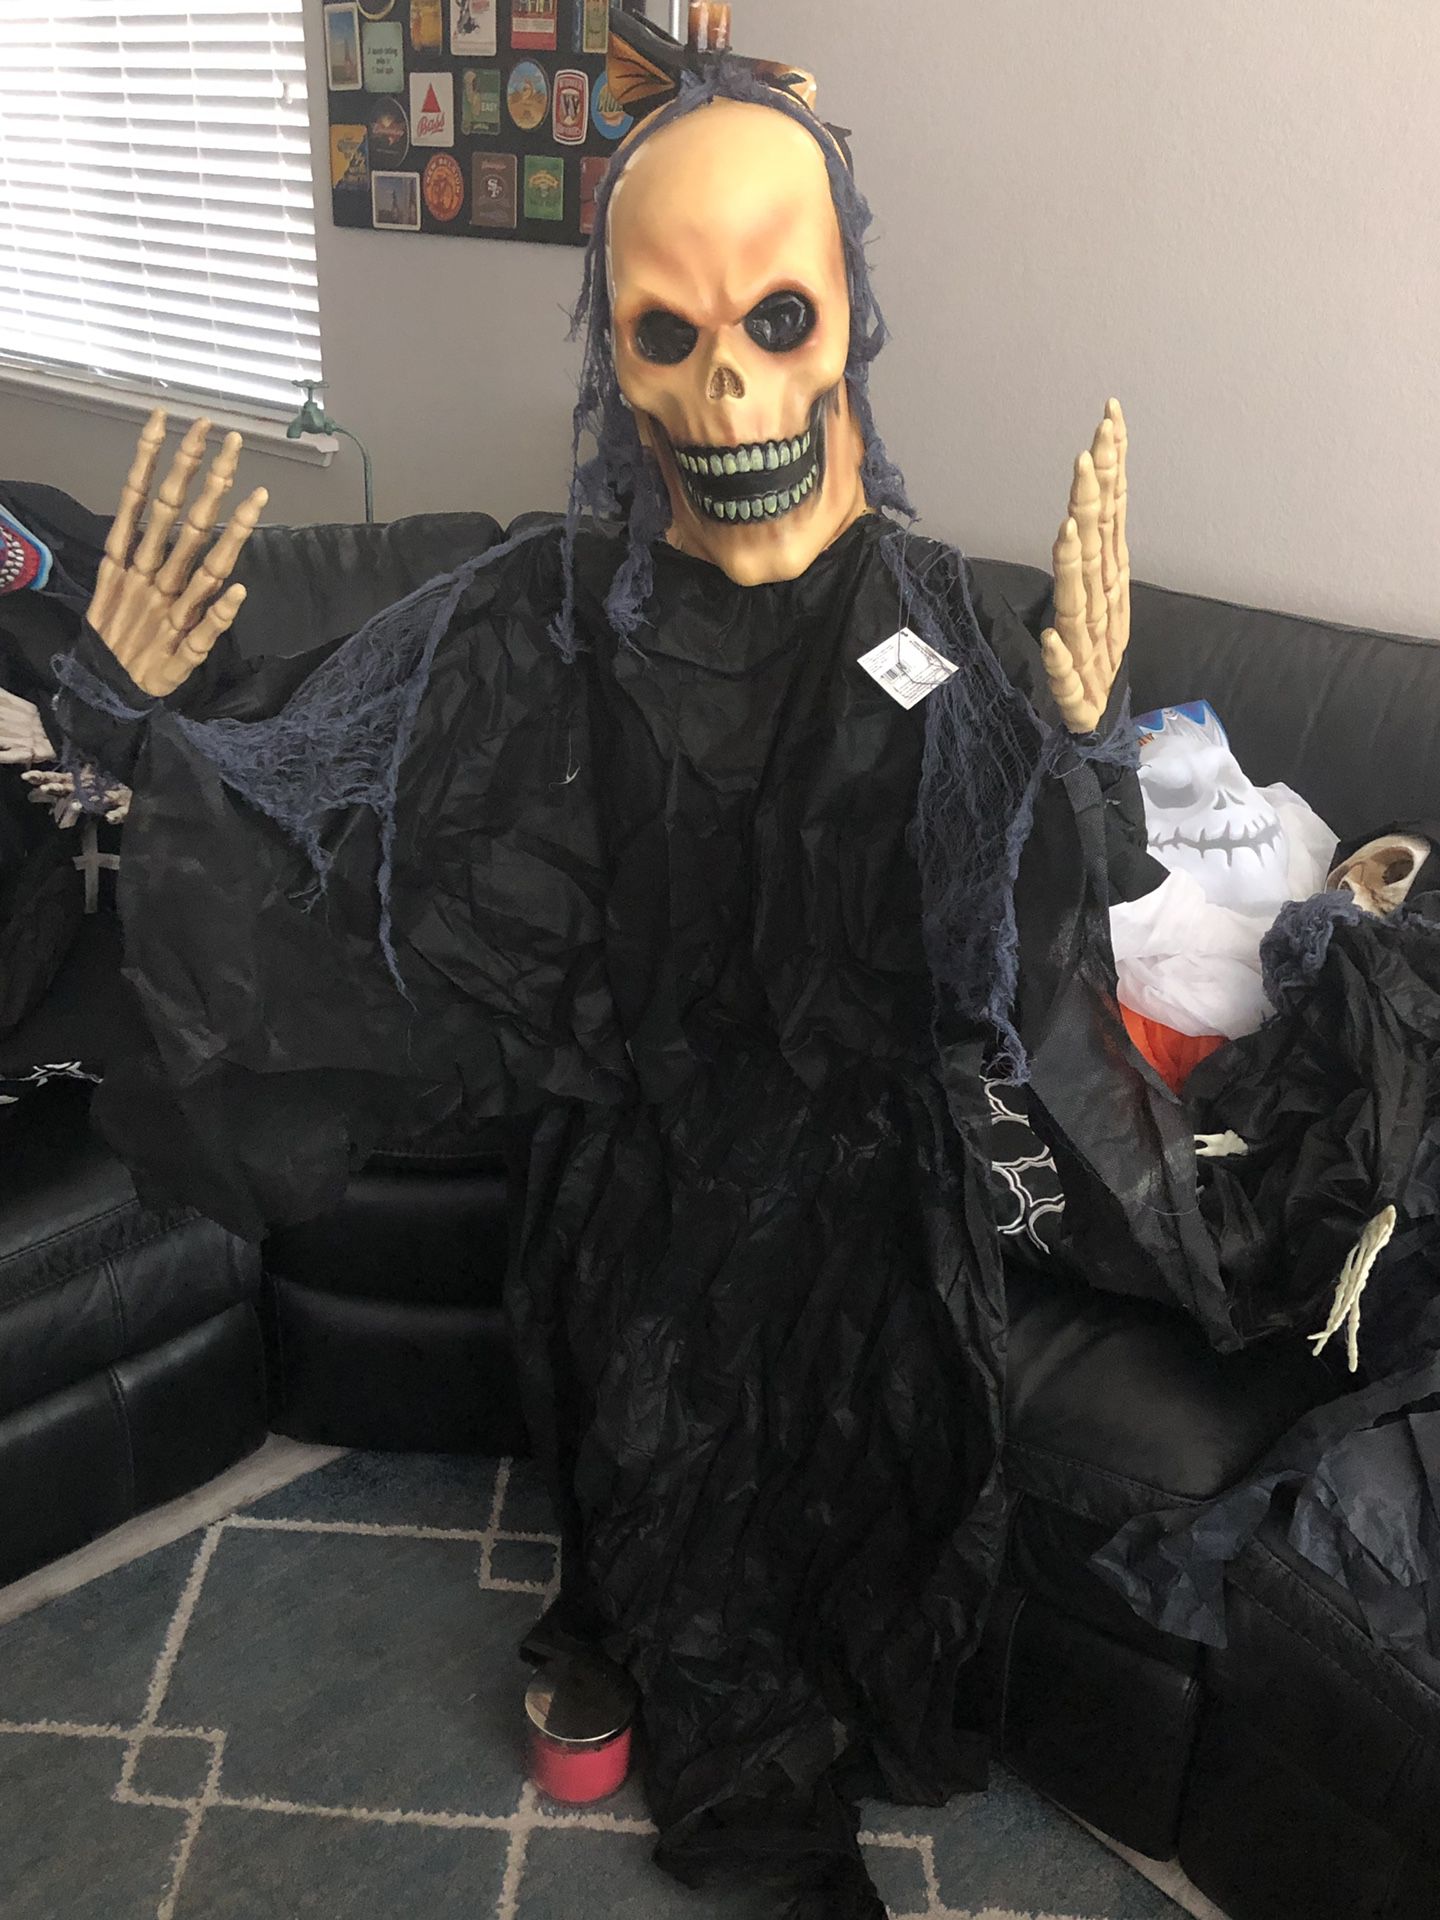 New Hanging Skeleton Posable Halloween Decoration!